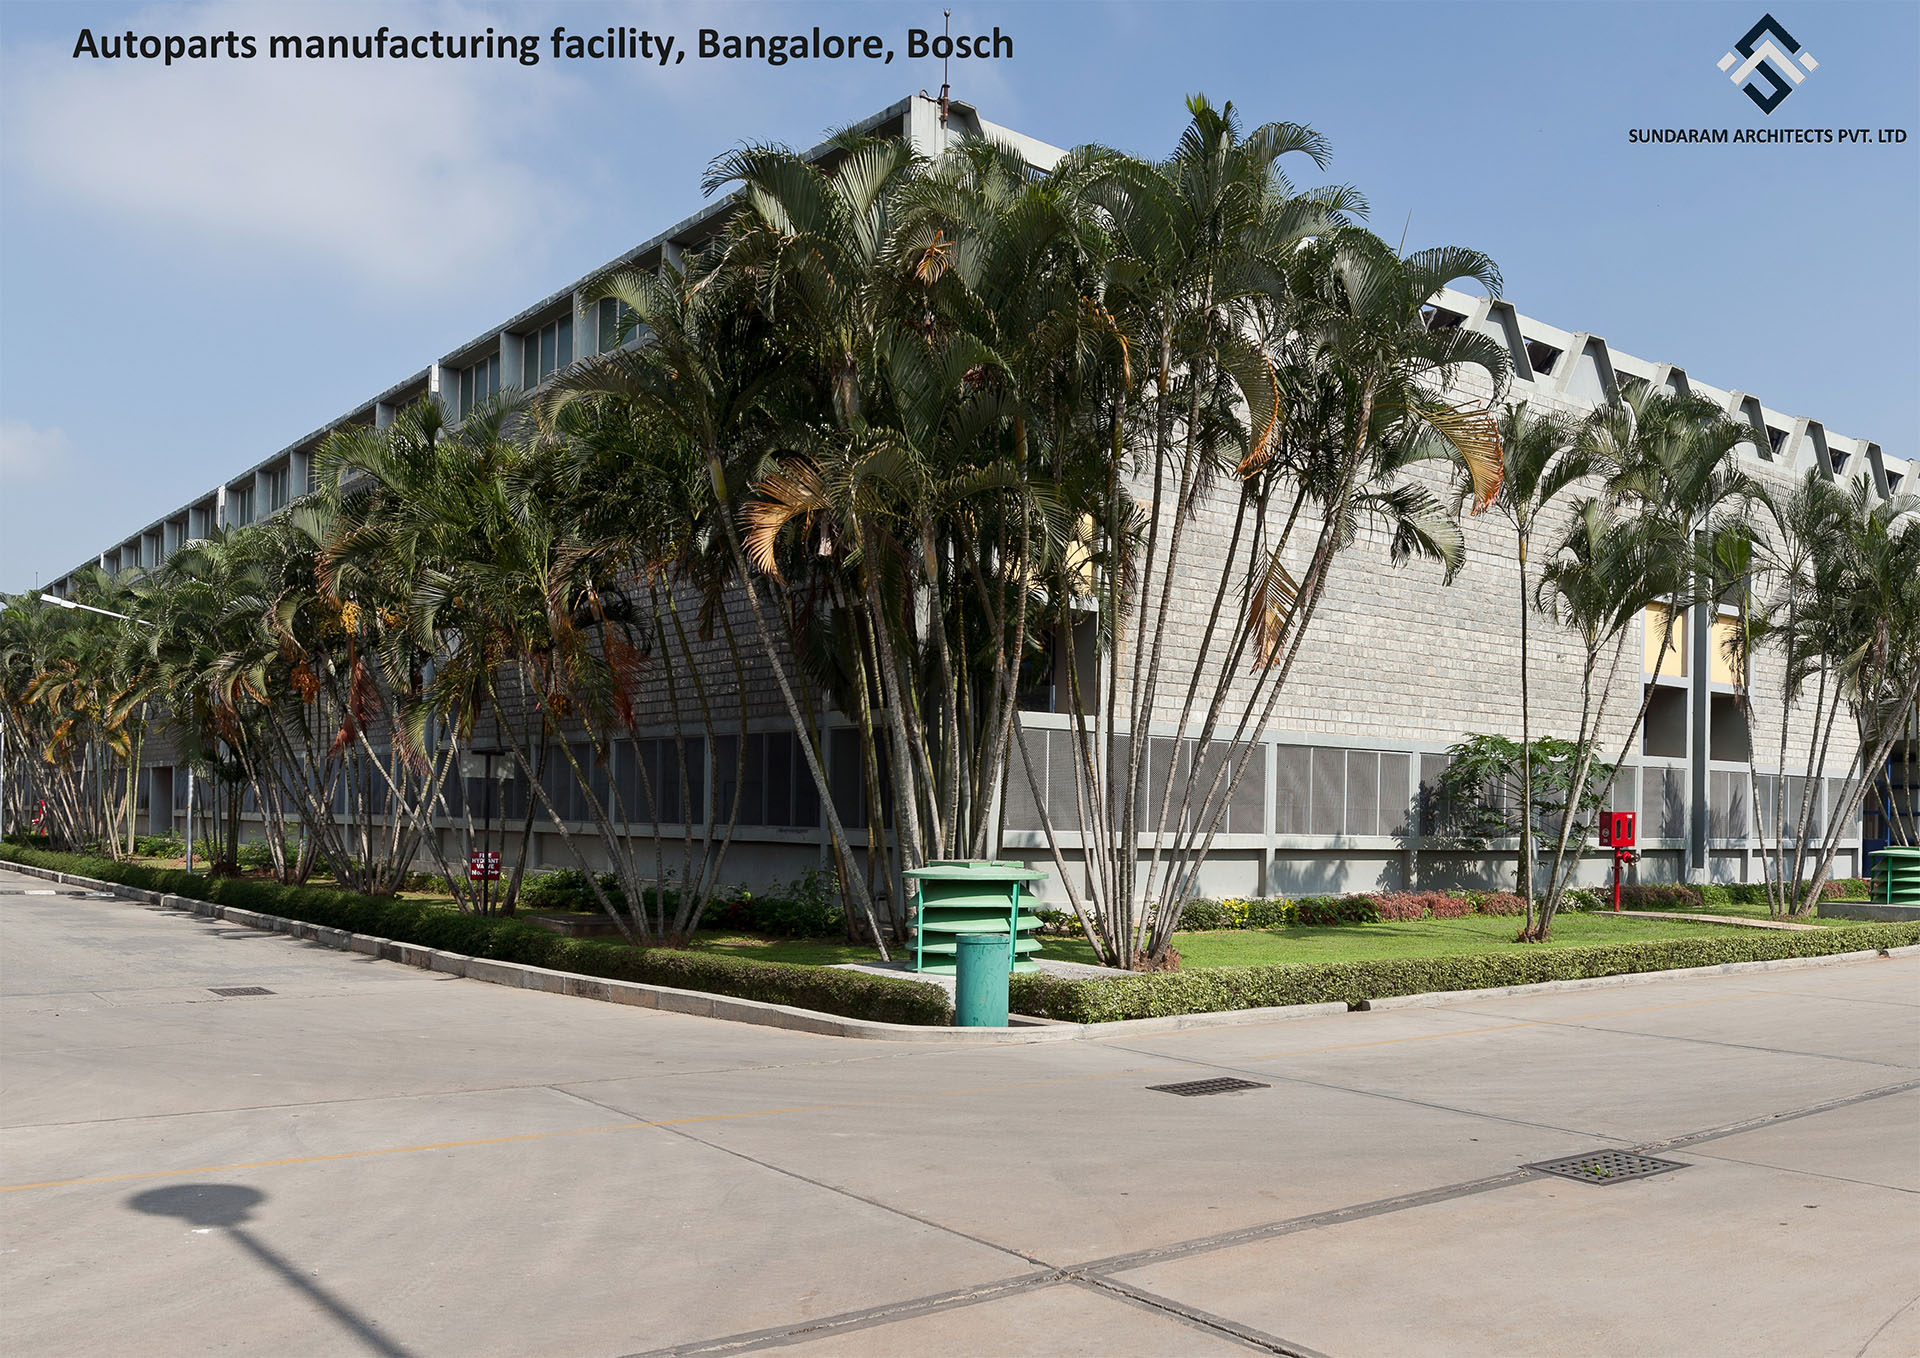 Sundaram Architects designed Autoparts Manufacturing Facility, Bangalore, Bosch